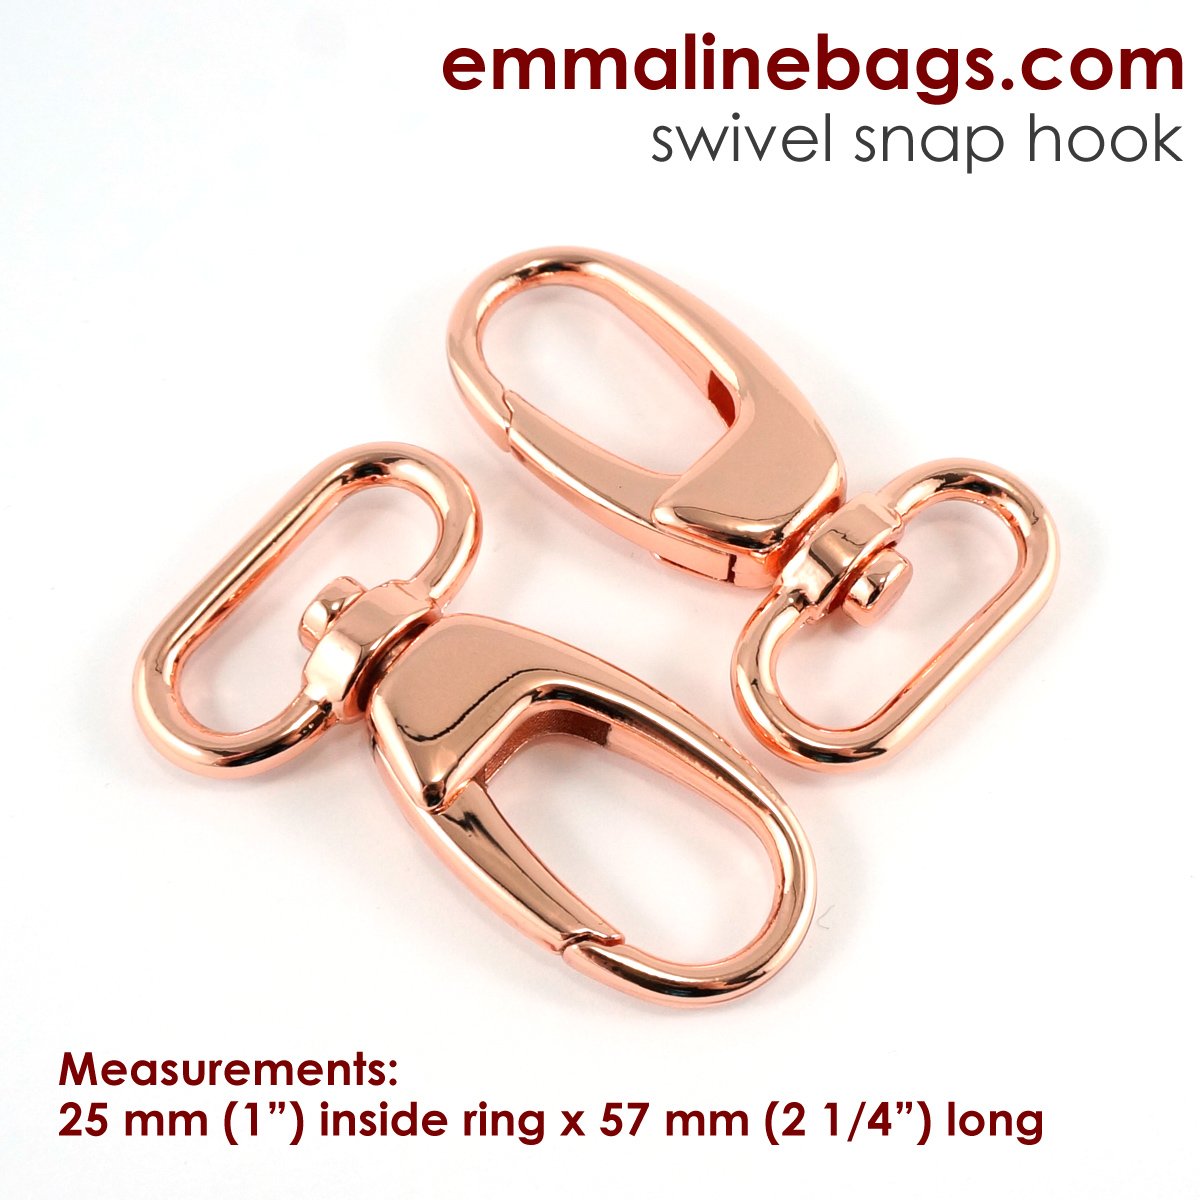 Swivel Snap Hook: Designer Profile (2 Pack)1" (25 mm) wide x (2 1/4") 57 mm long (fits 1" strap) copper